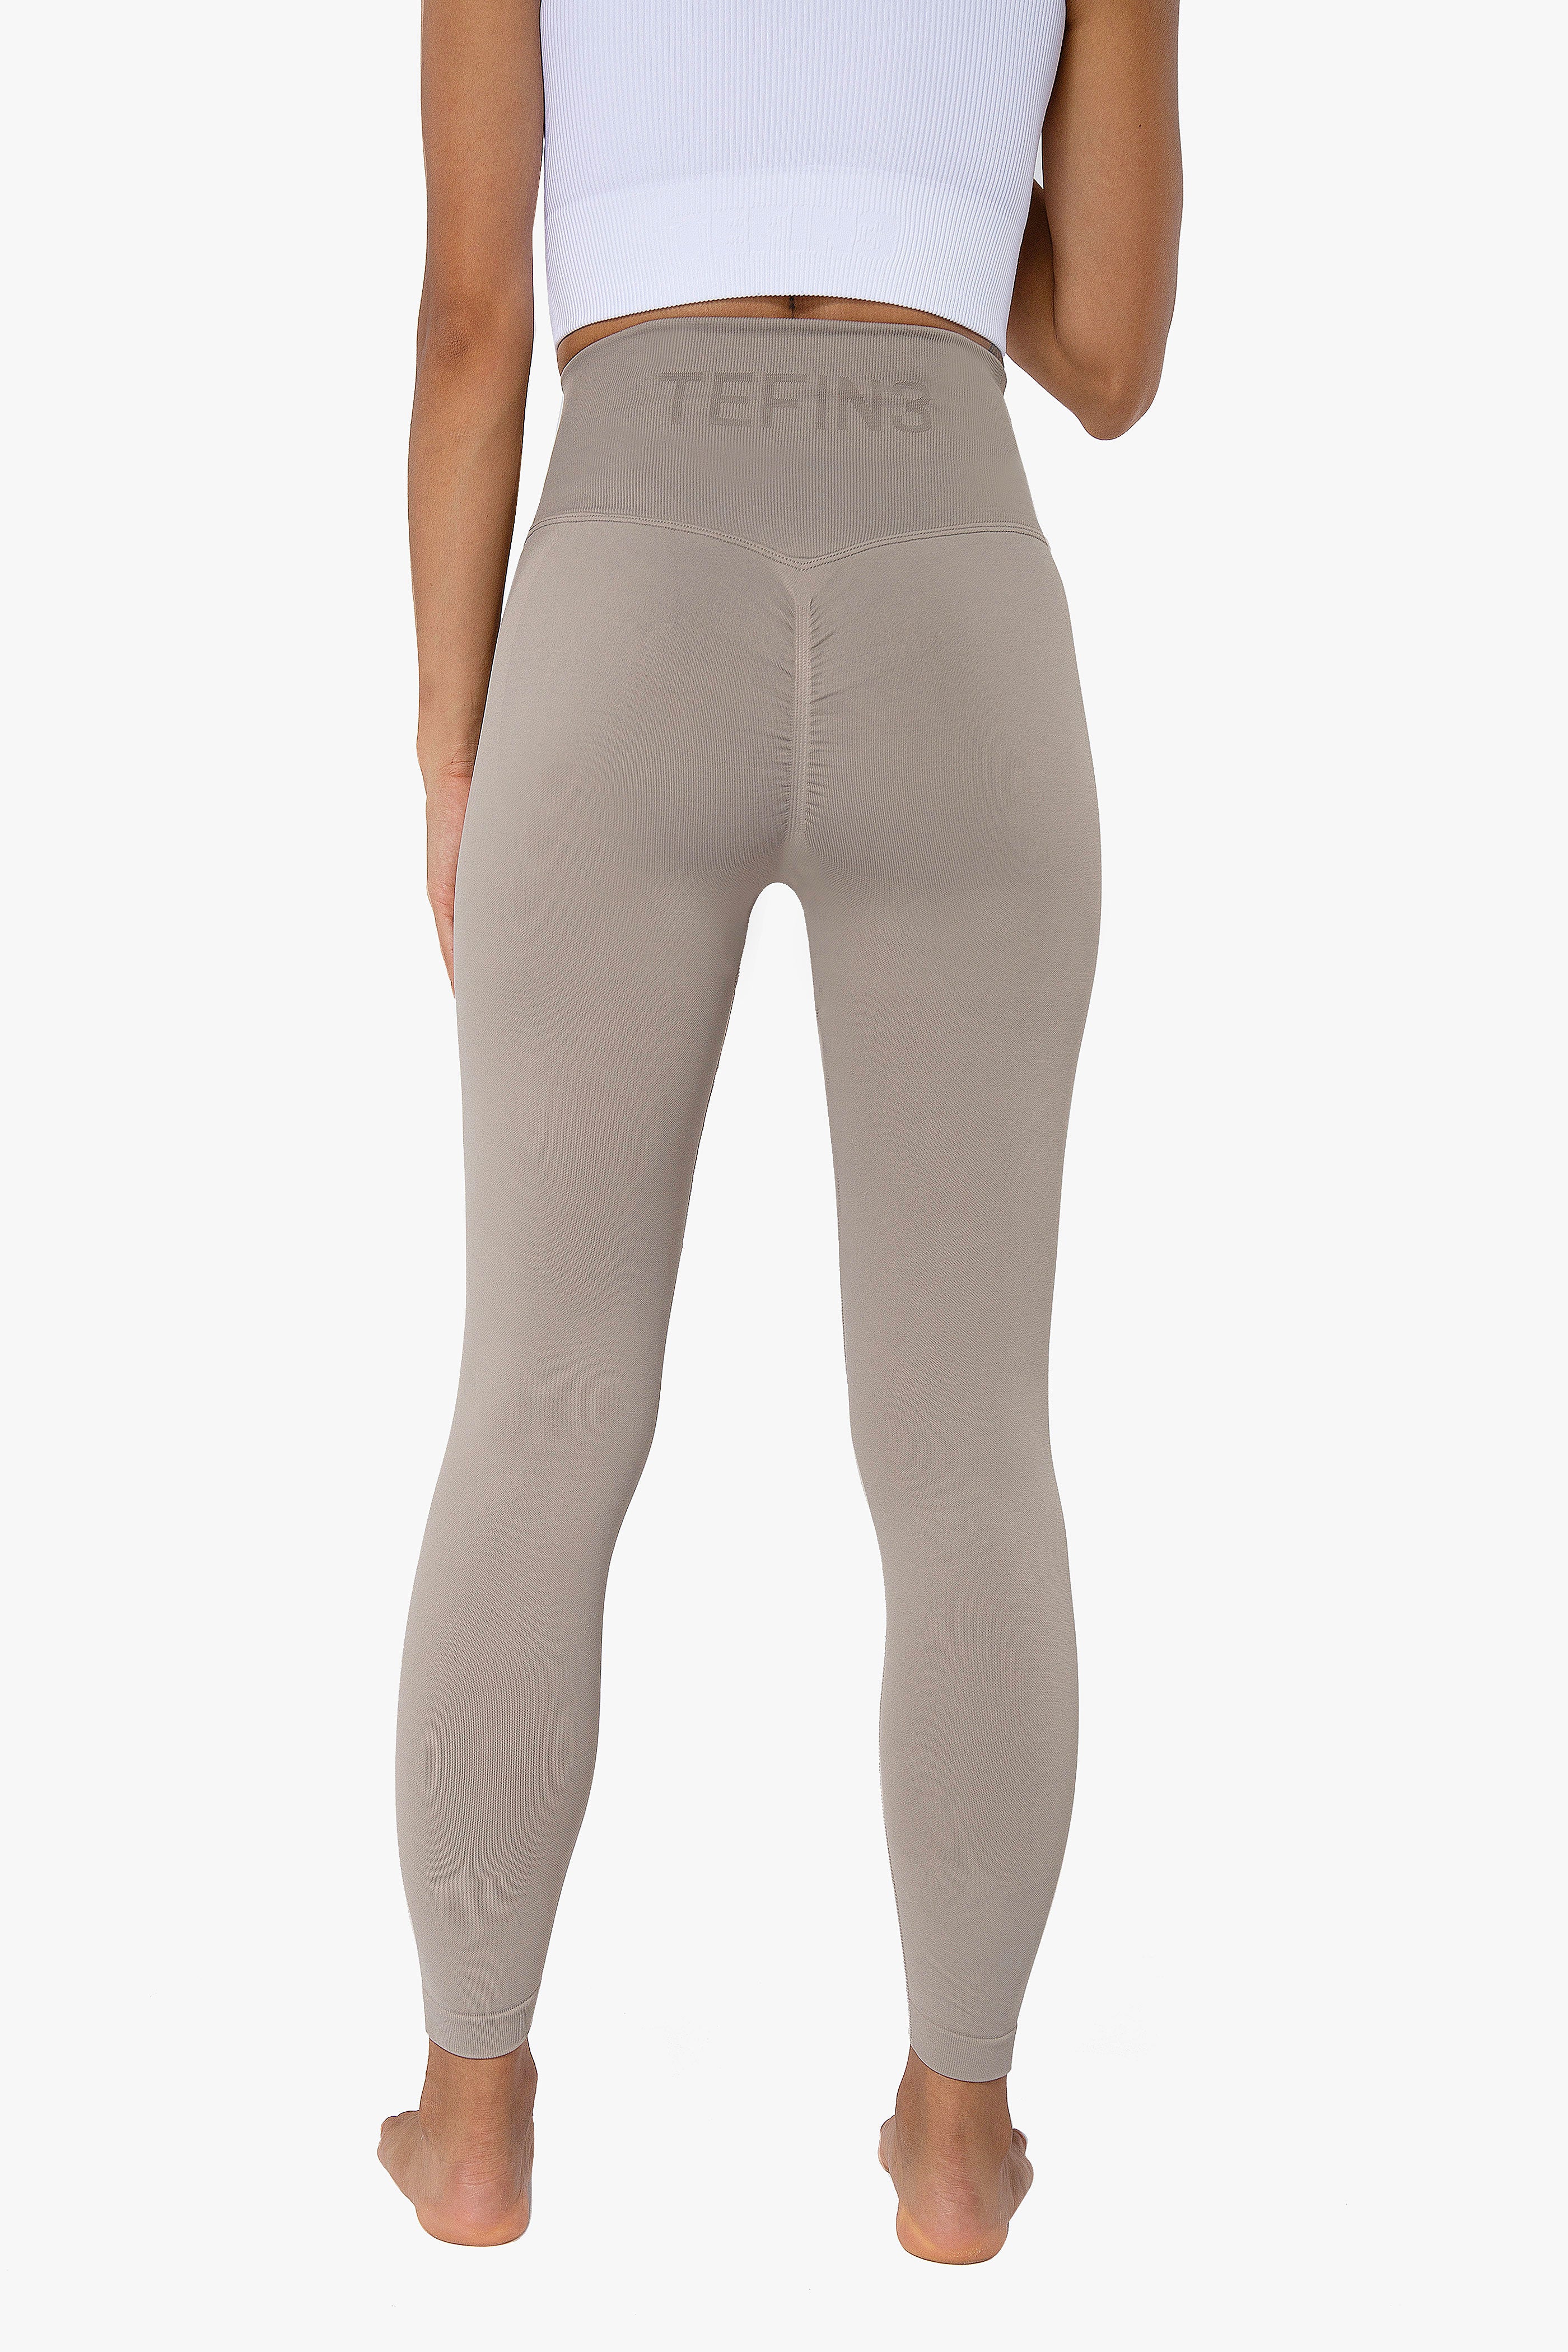 TEFIN3 Comfy seamless scrunch leggings (3)